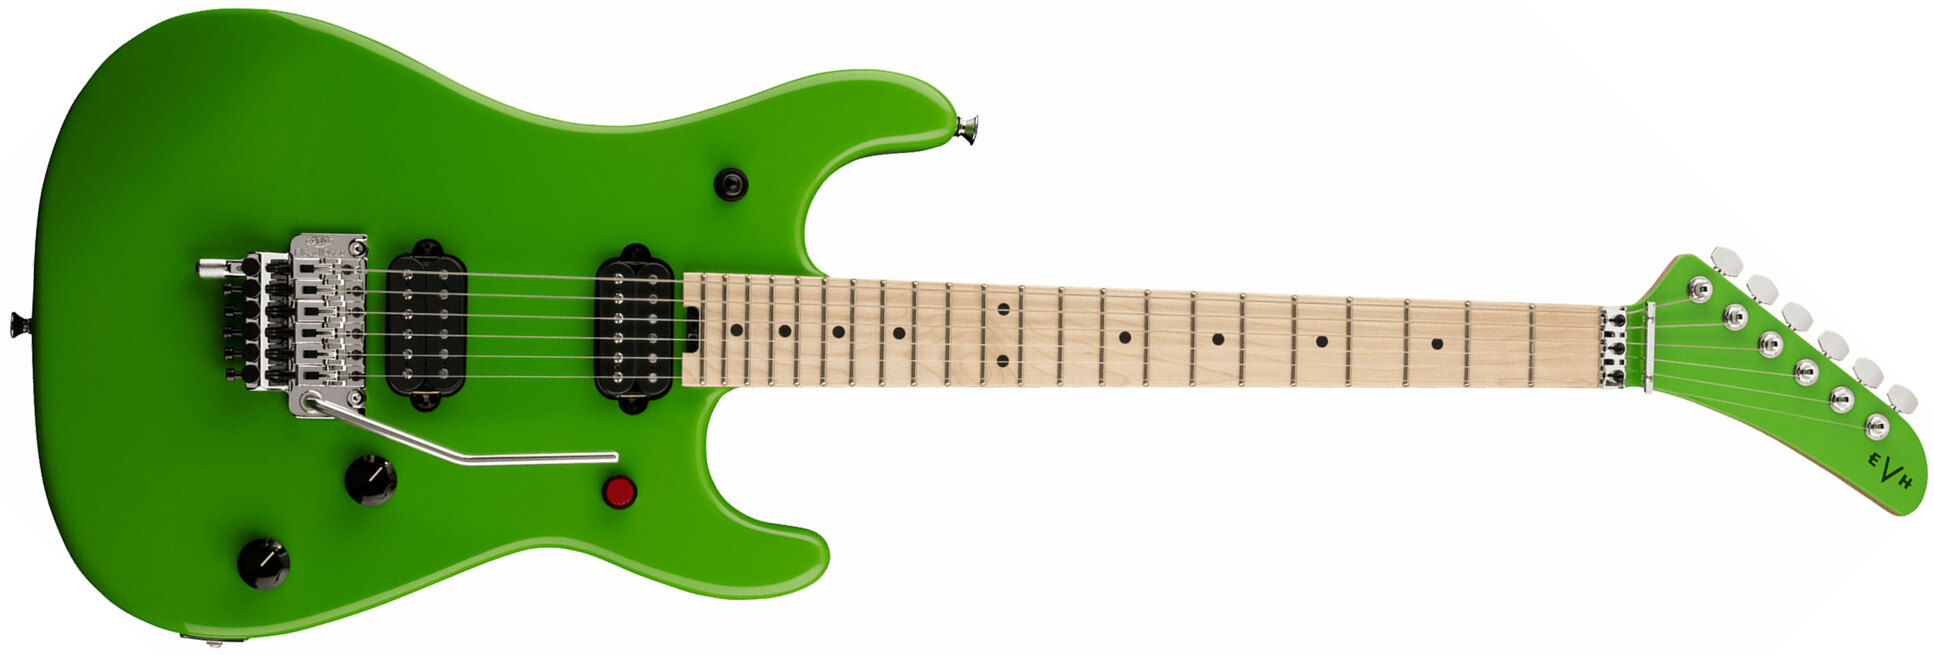 Evh 5150 Standard Mex 2h Fr Mn - Slime Green - Str shape electric guitar - Main picture